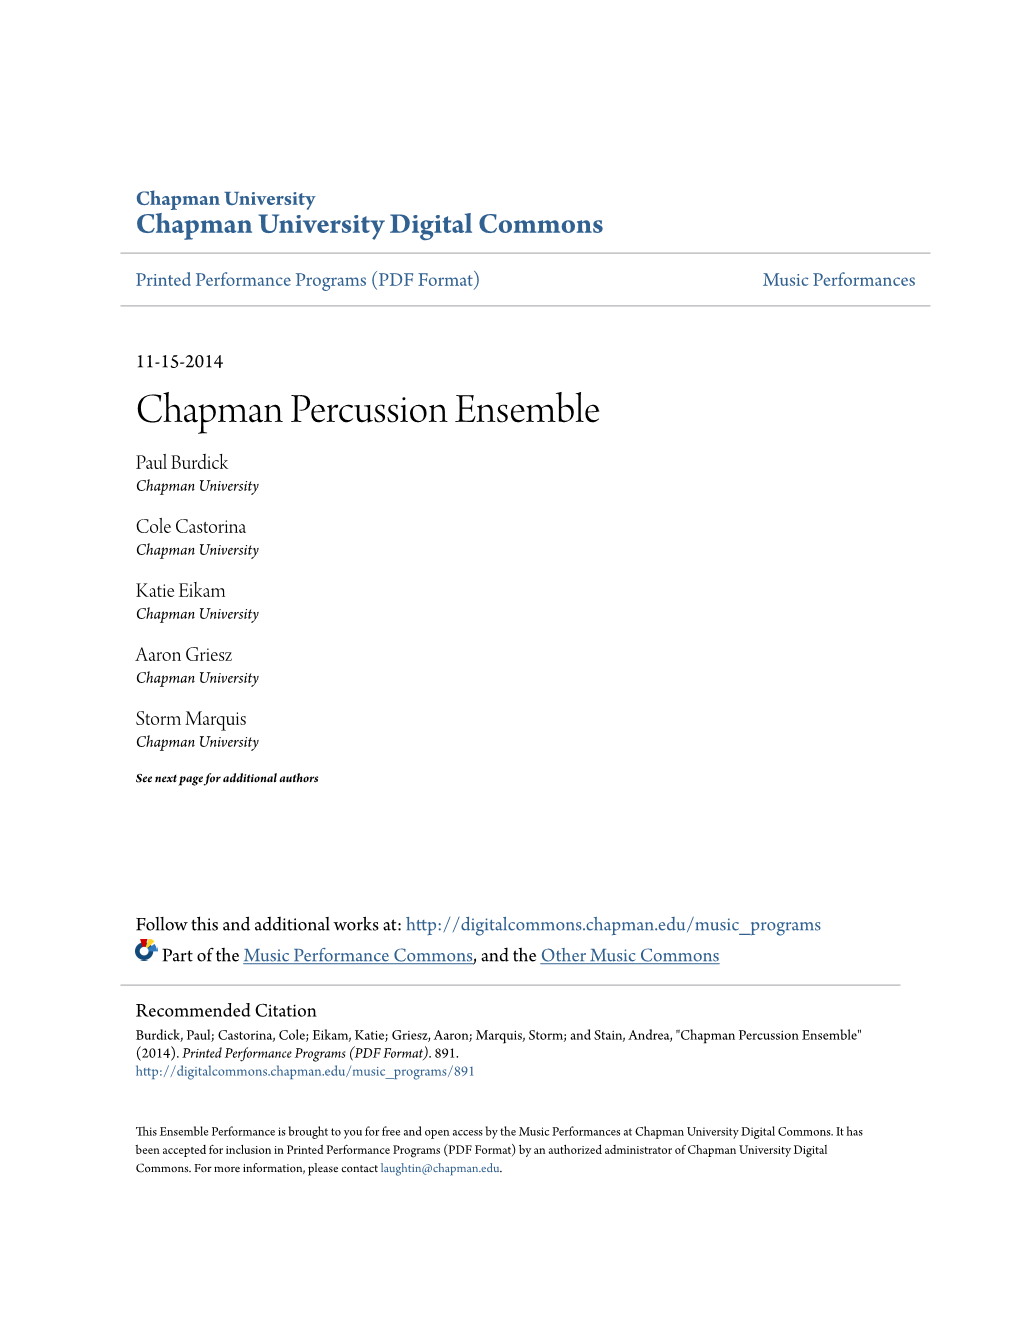 Chapman Percussion Ensemble Paul Burdick Chapman University